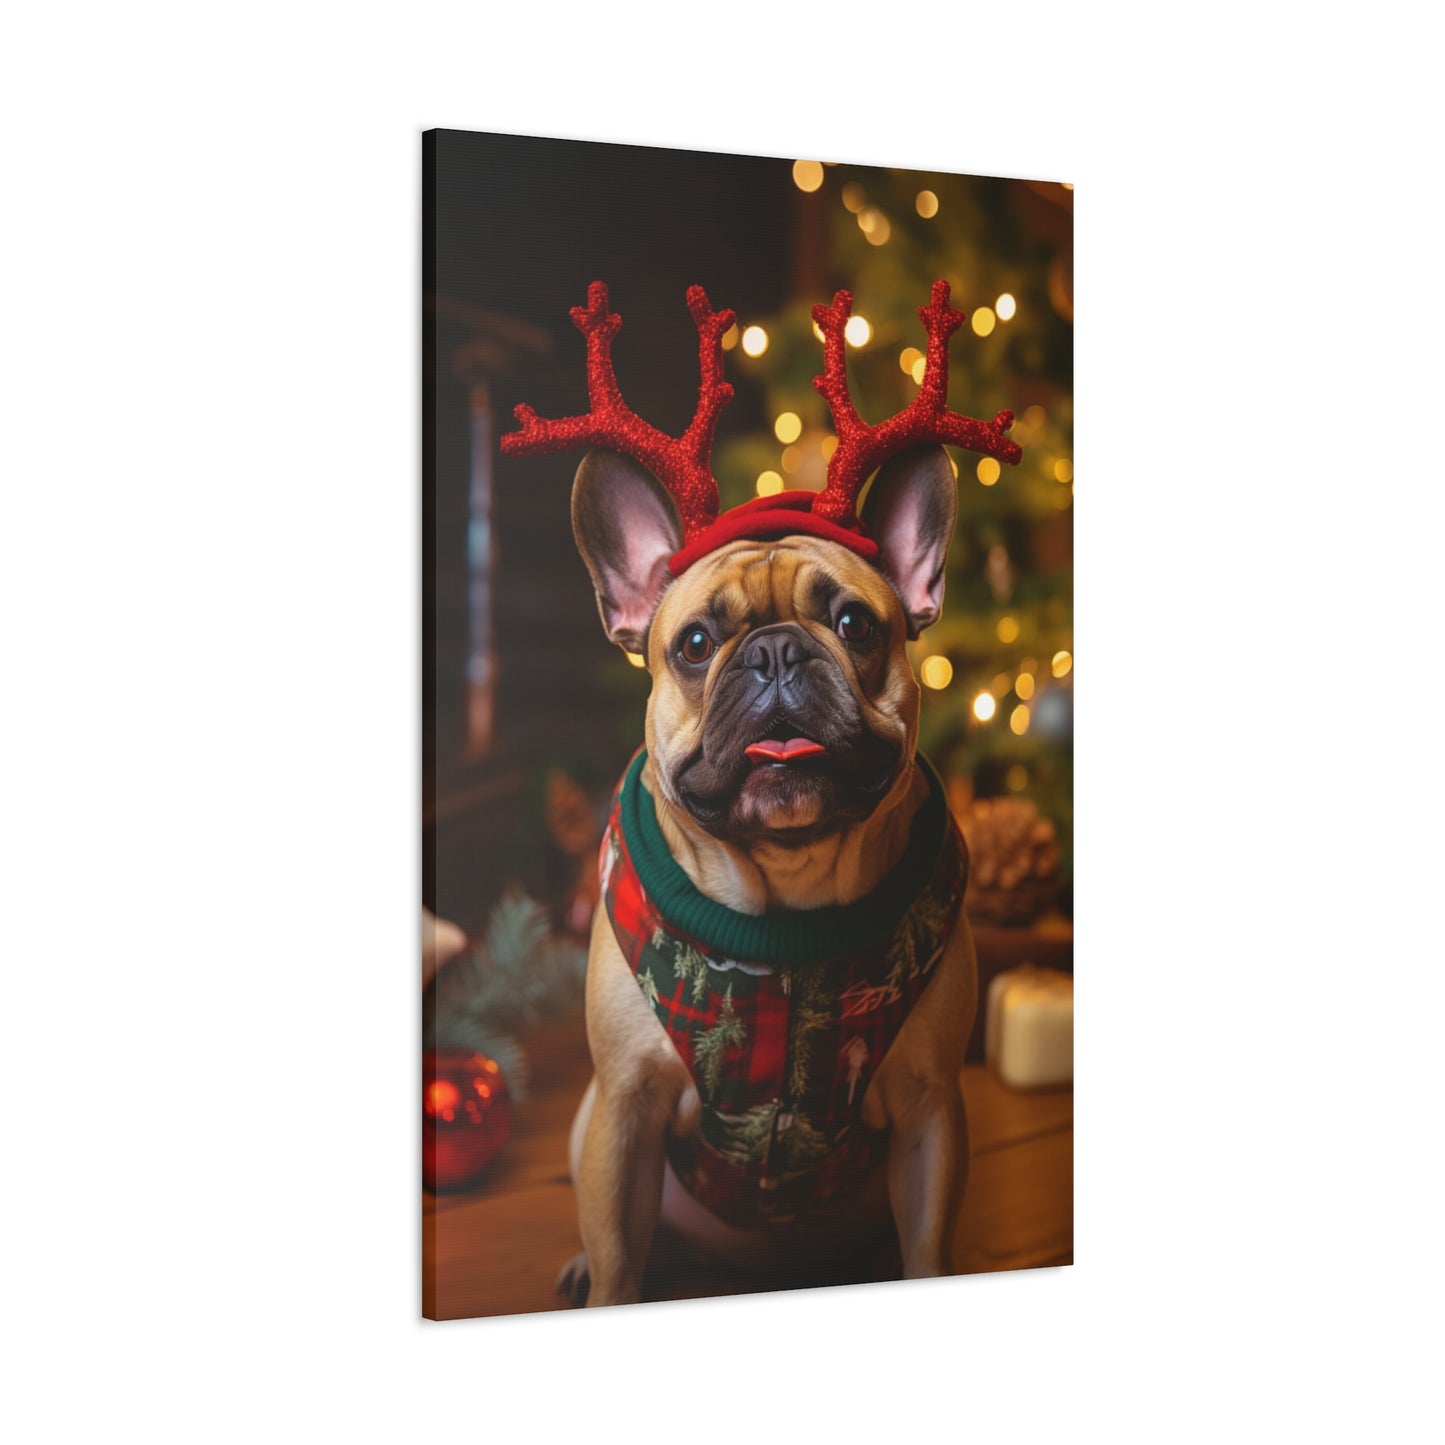 Christmas Bulldog with reindeer antlers decor ideas